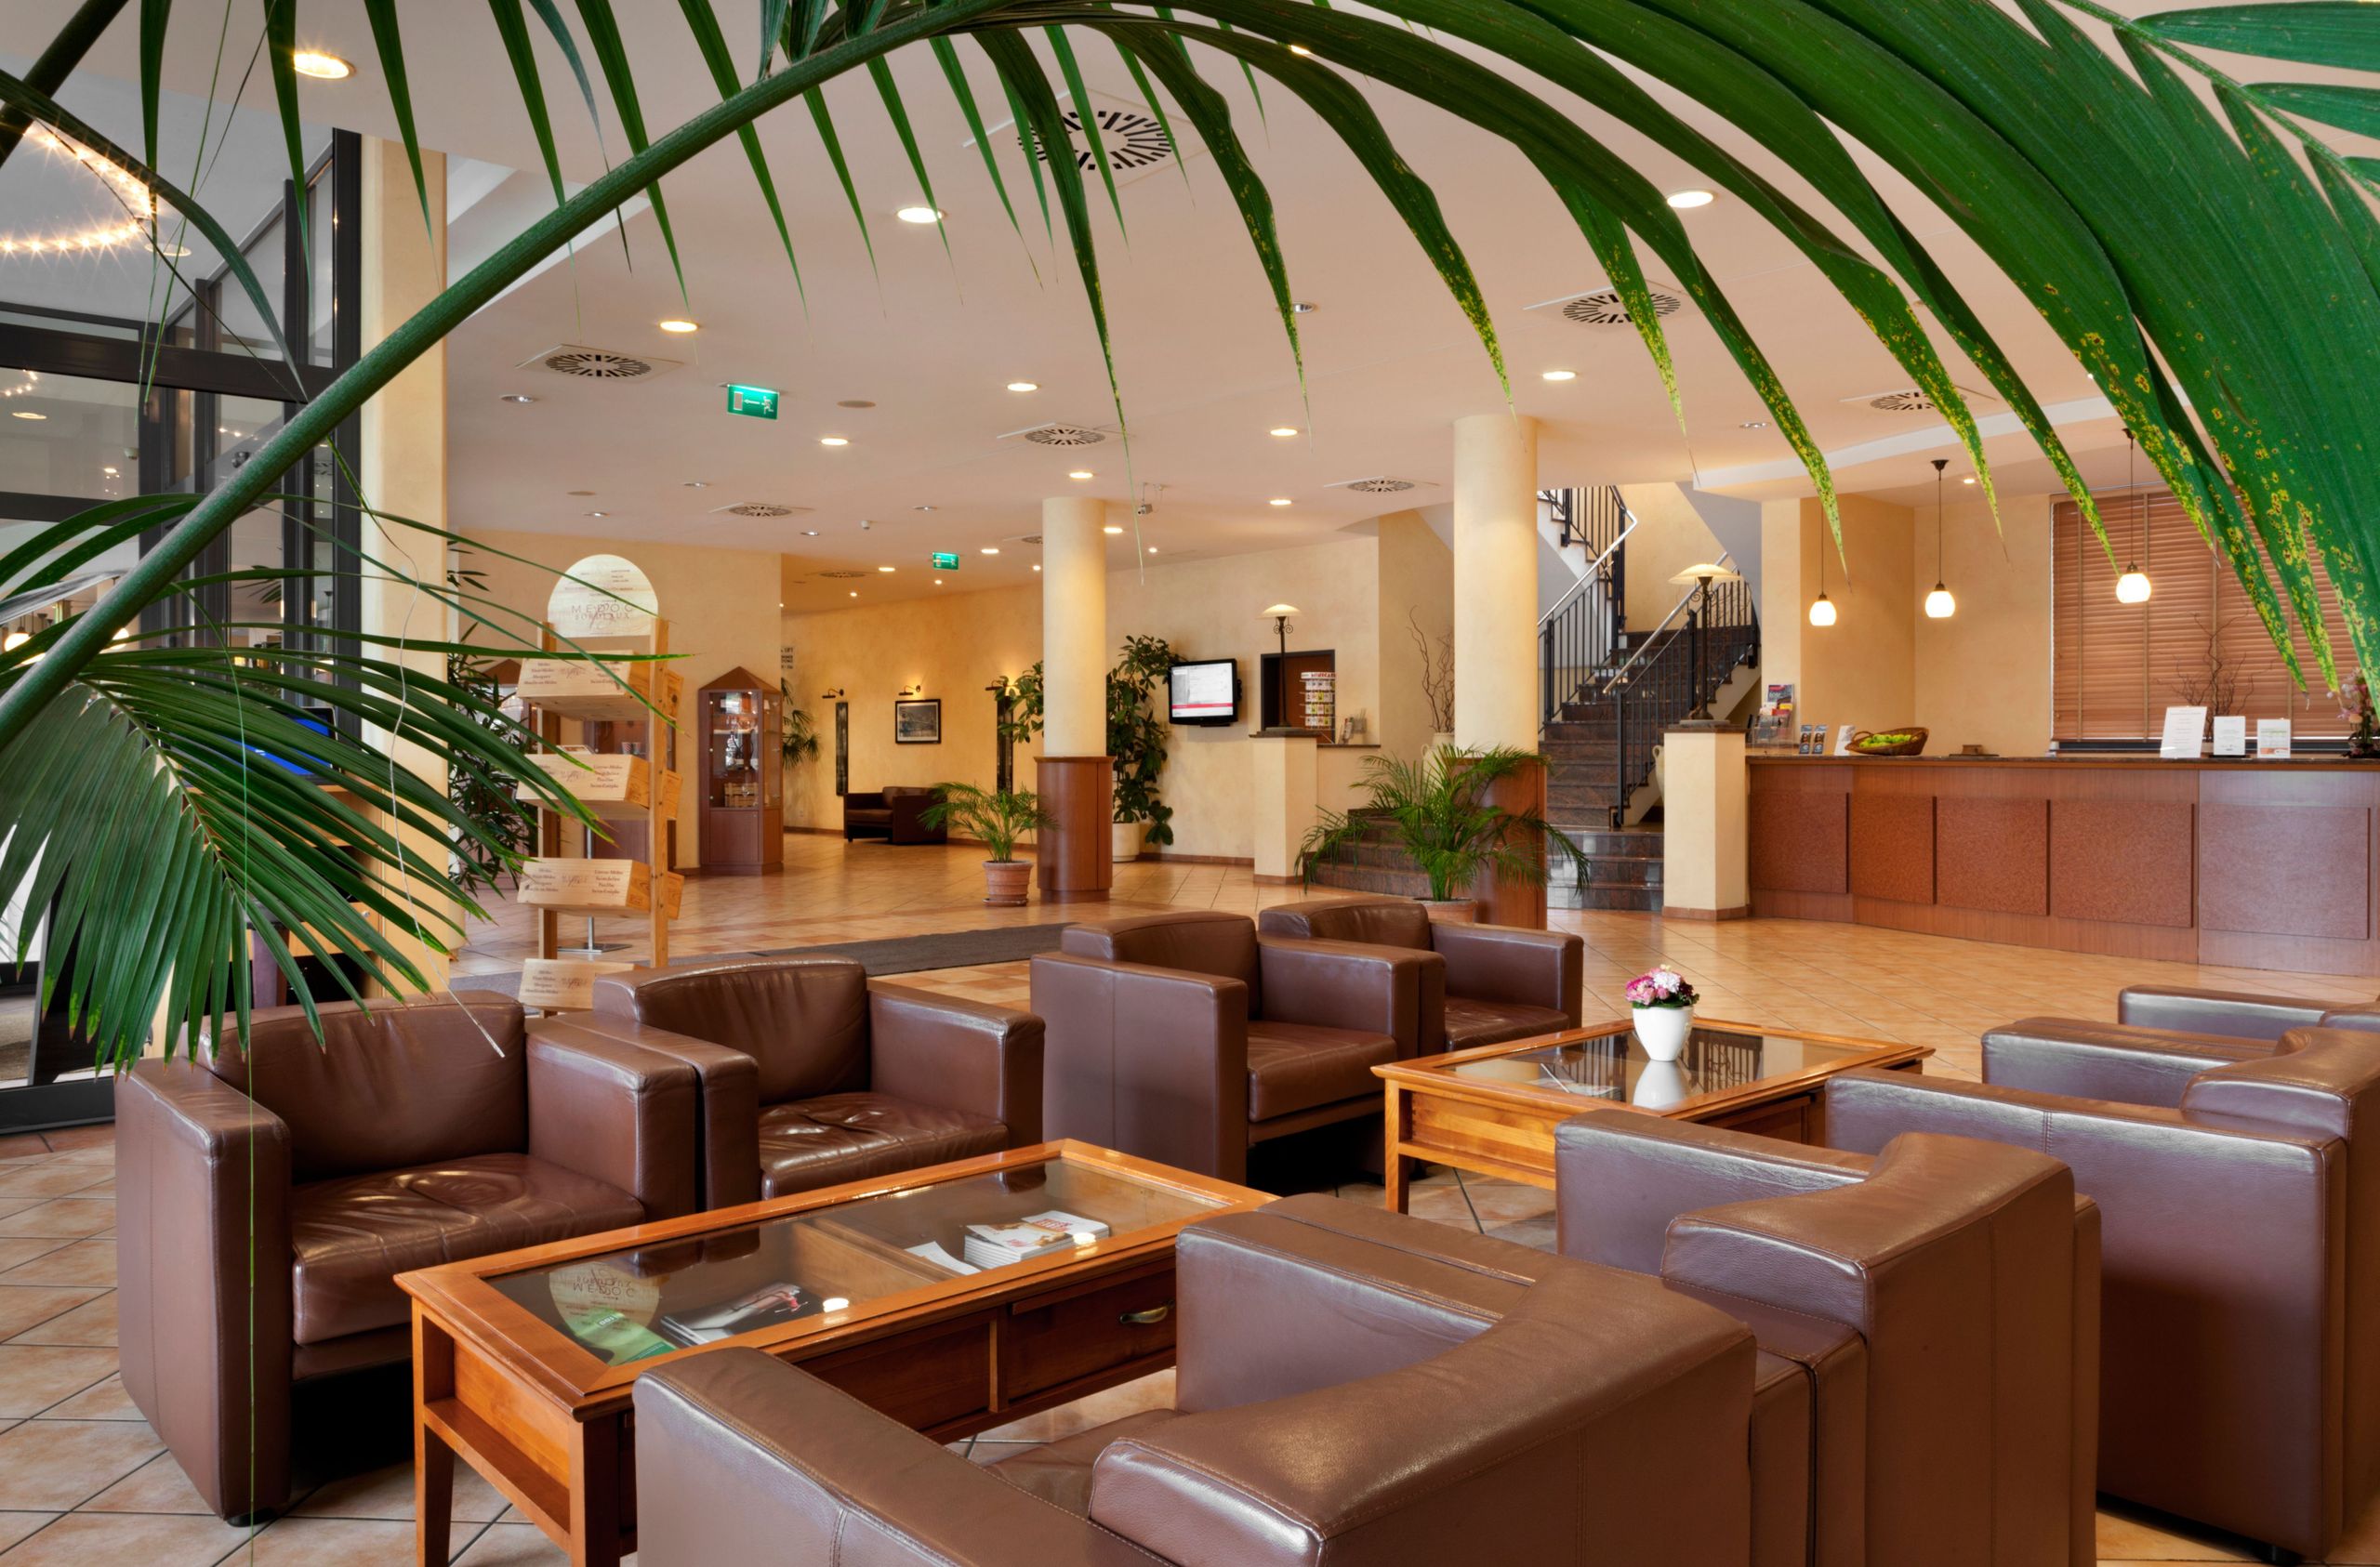 IntercityHotel Bremen – lobby, reception, lounge